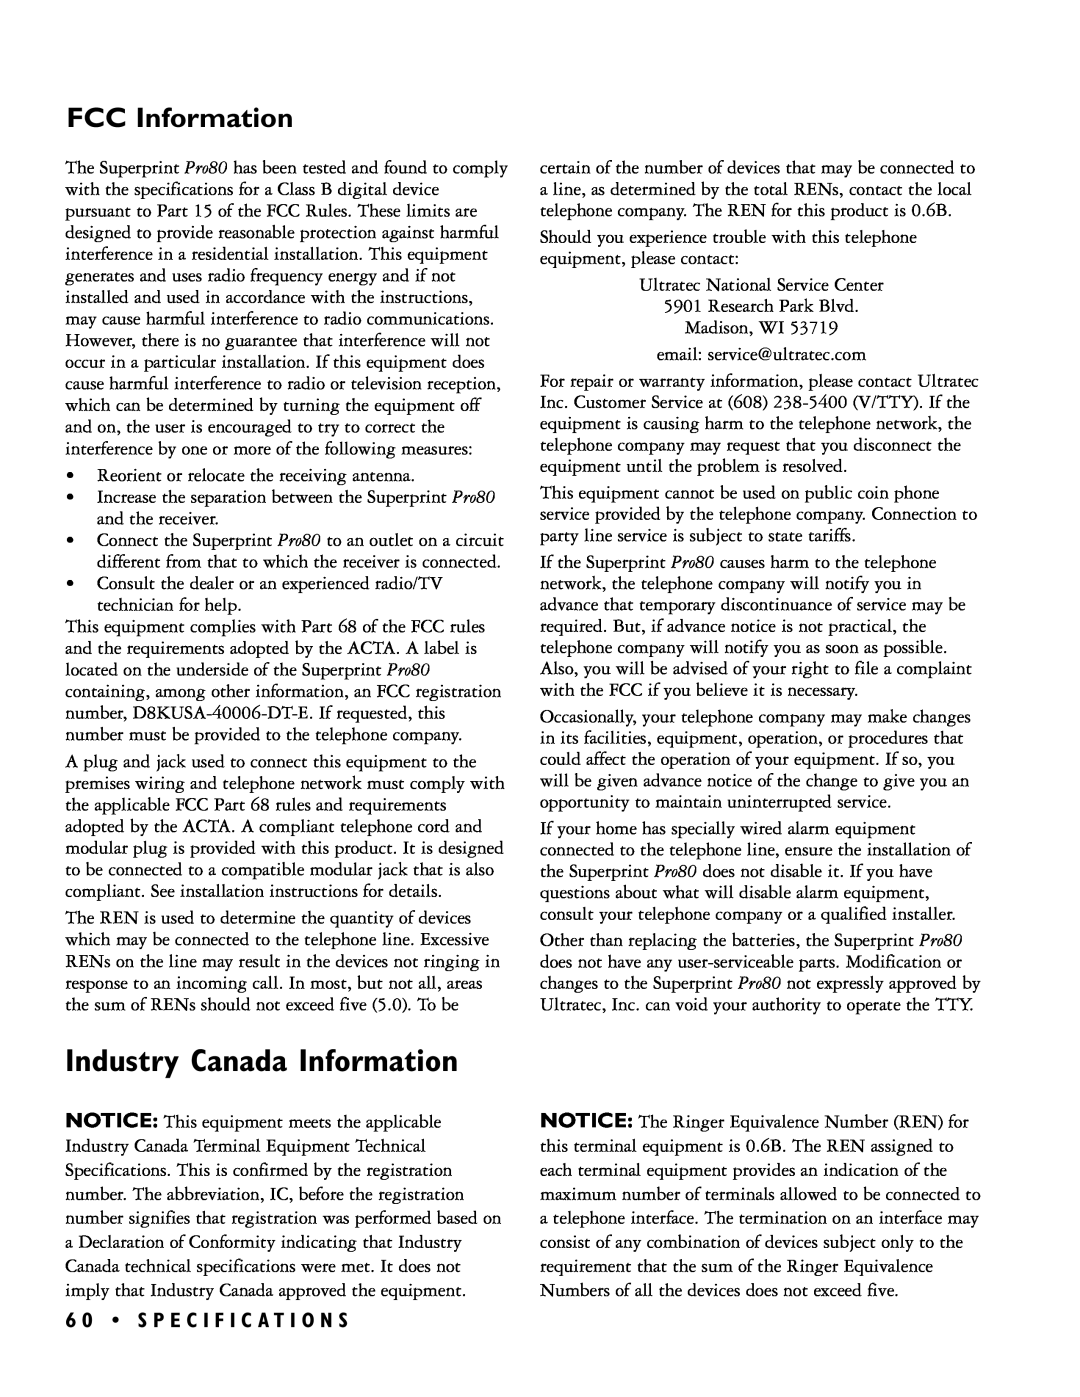 Ultratec PRO80TM manual Industry Canada Information, FCC Information, 6 0 S P E C I F I C A T I O N S 